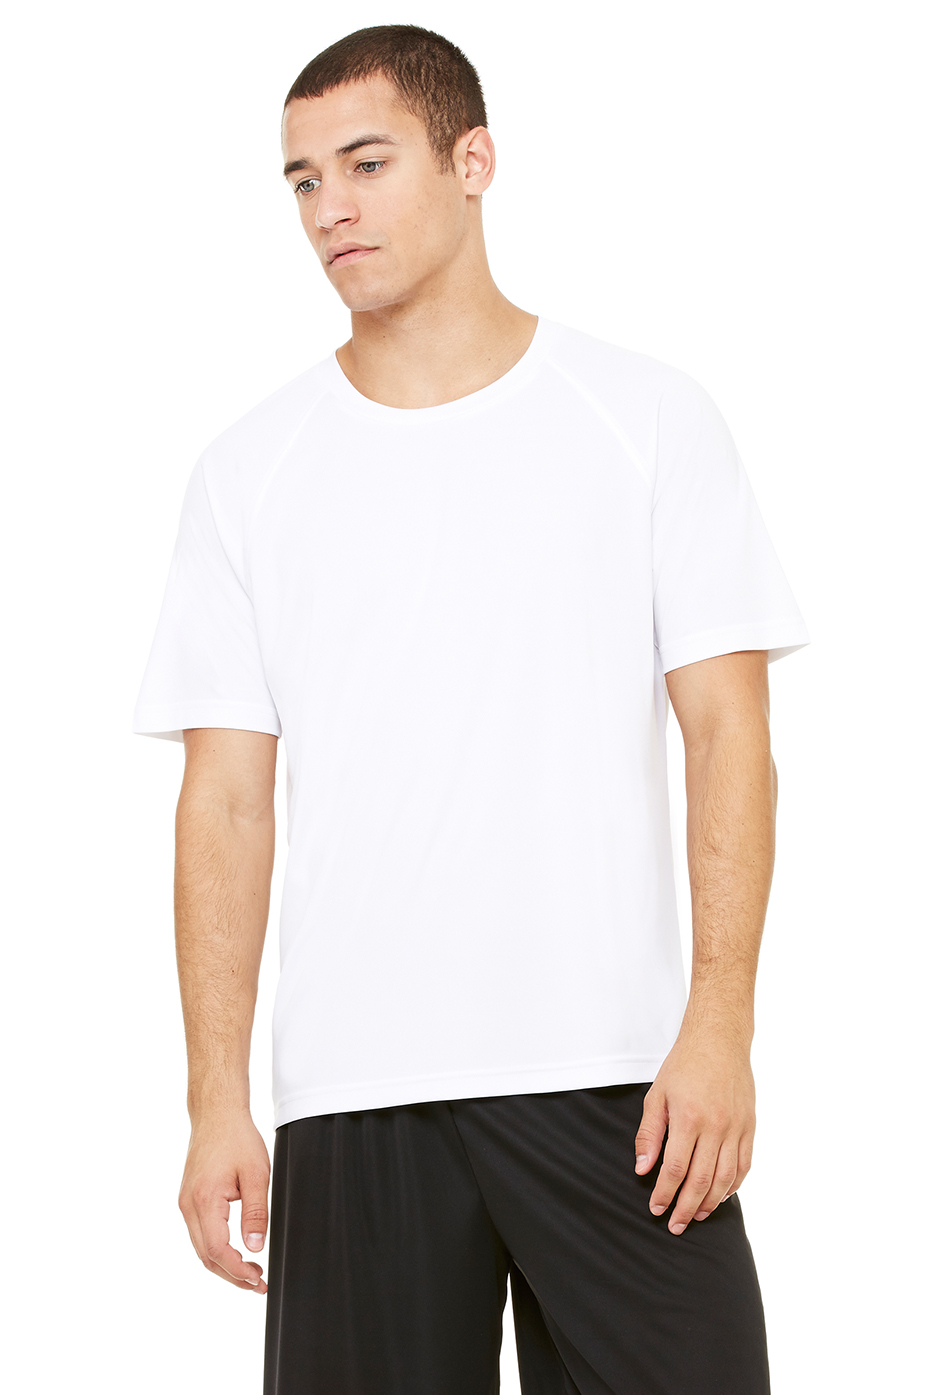 white raglan shirt